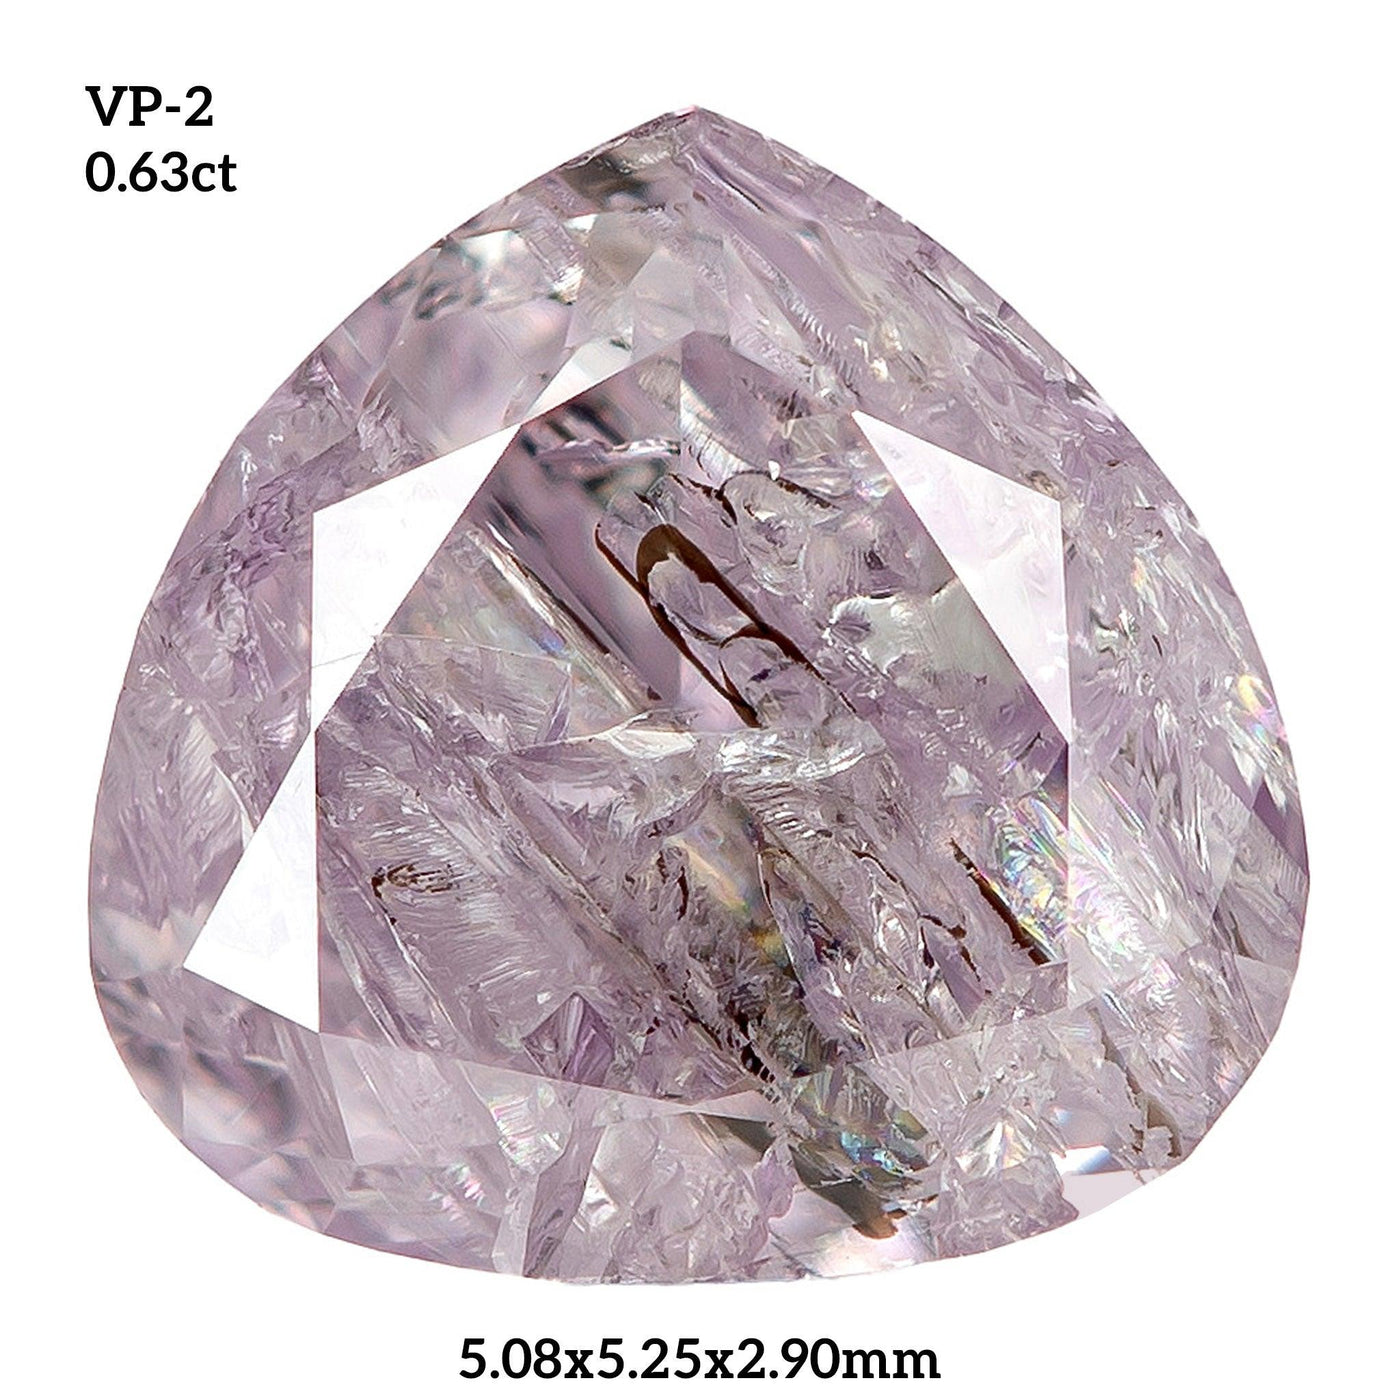 VP2 - Vivid pink pear diamond